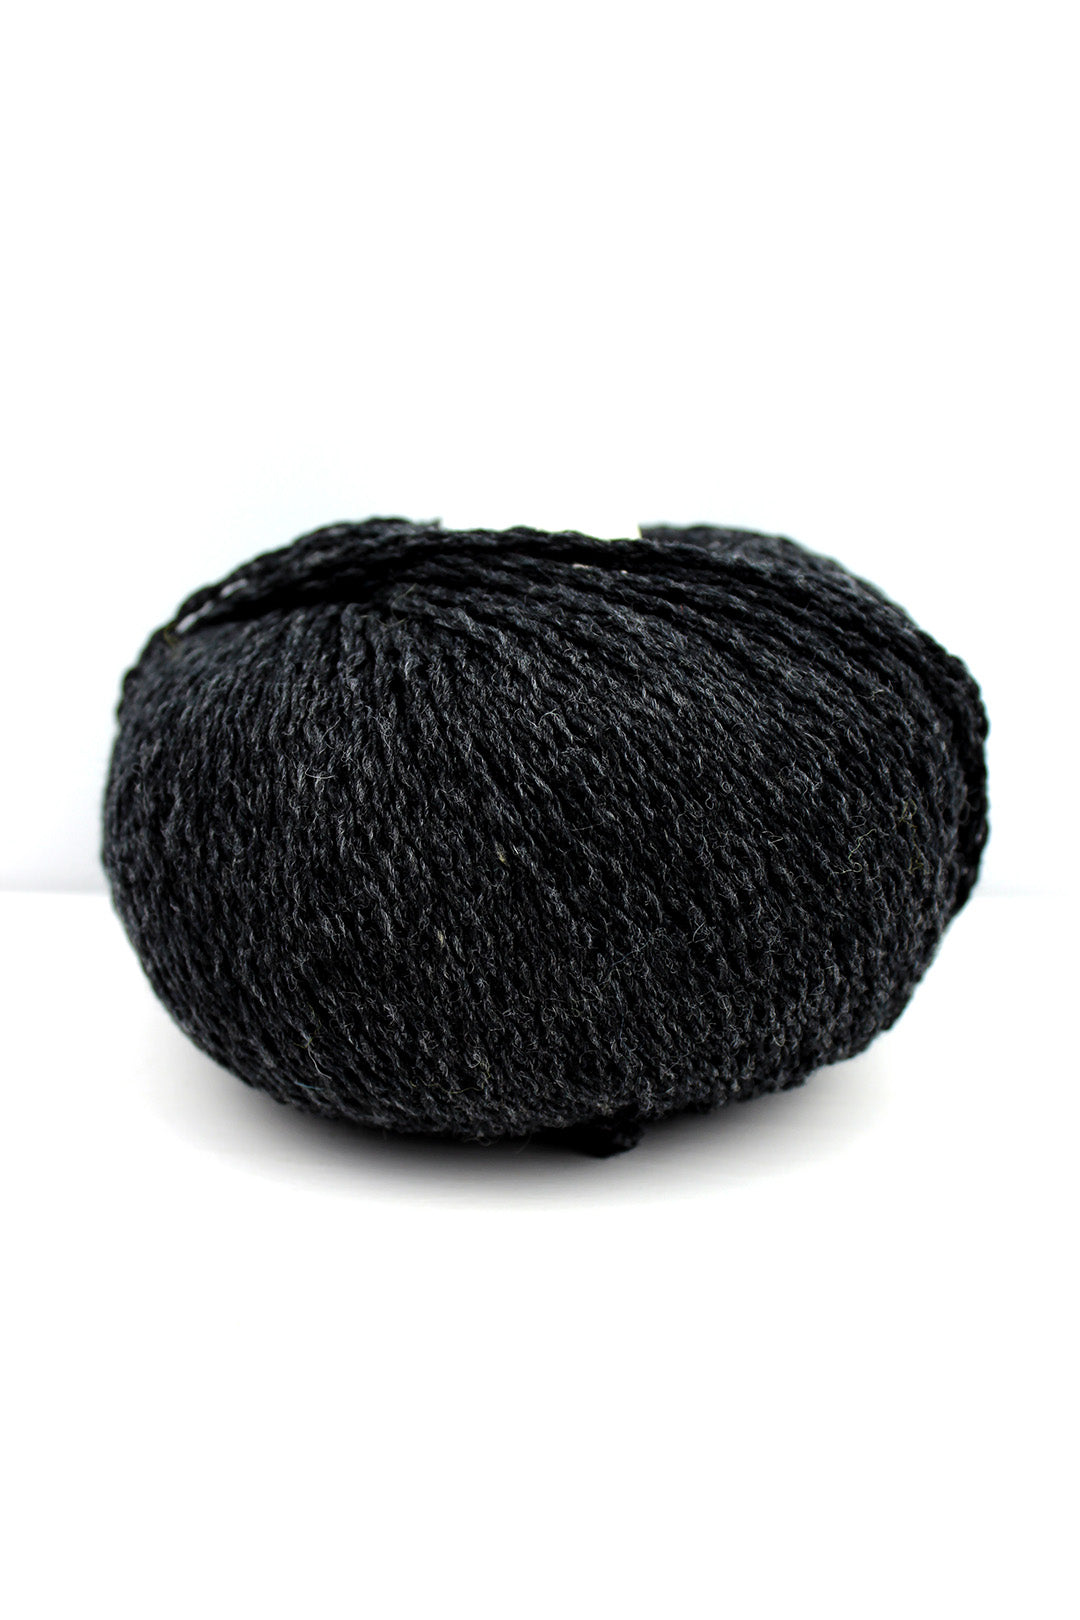 Di Gilpin yarn in charcoal Morian colourway. Scottish Textiles Showcase